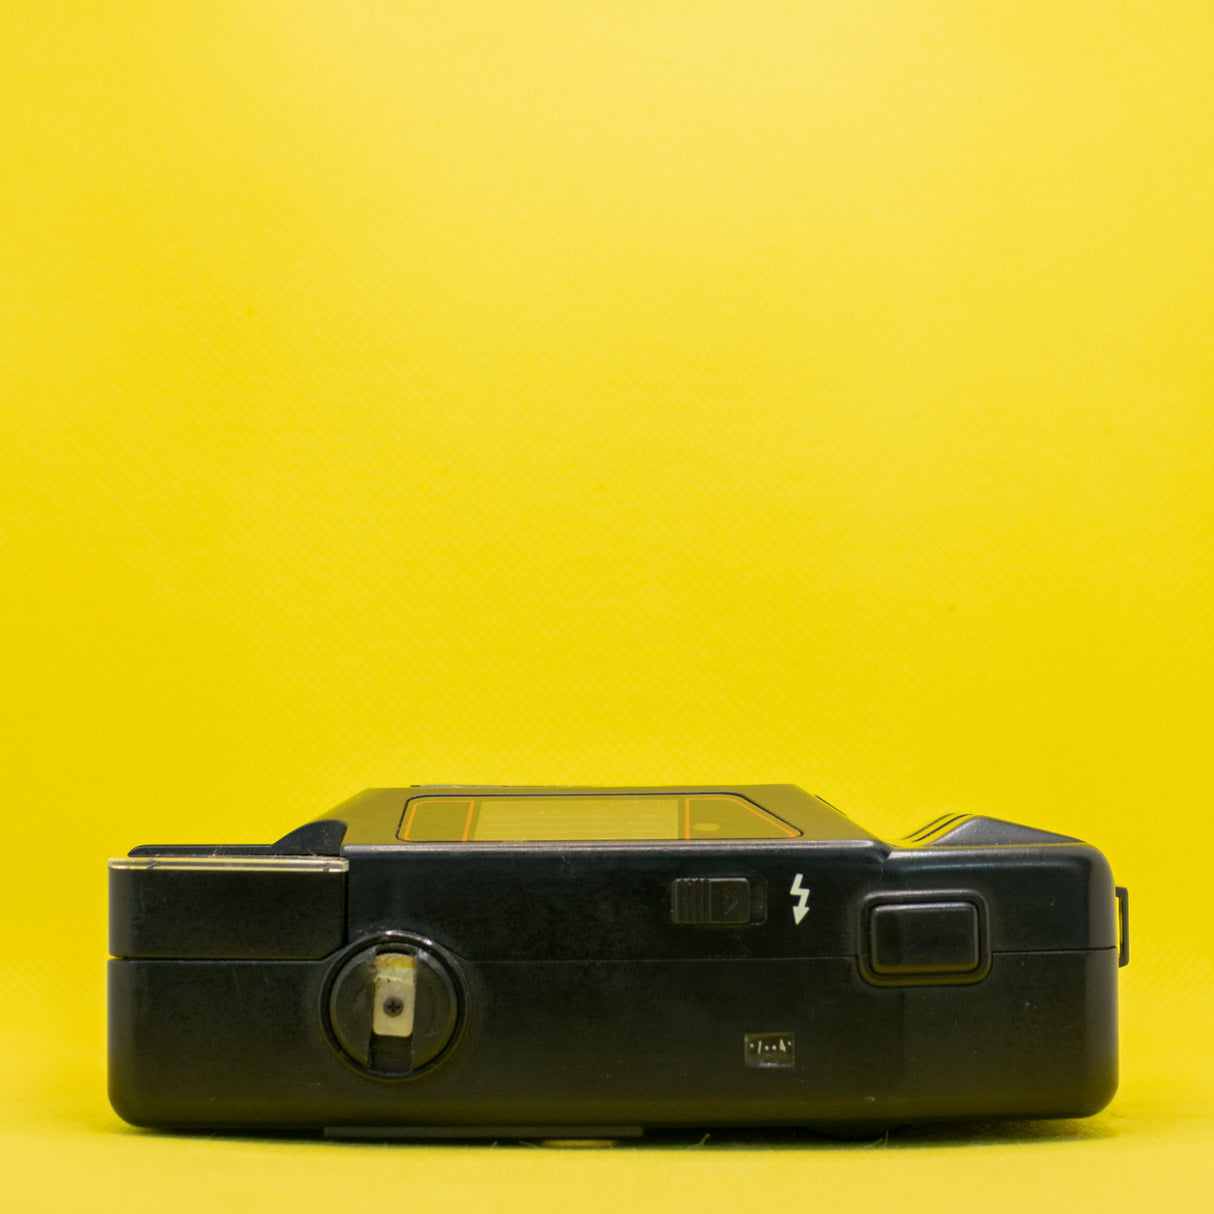 Fetana - Macchina fotografica a pellicola 35mm vintage